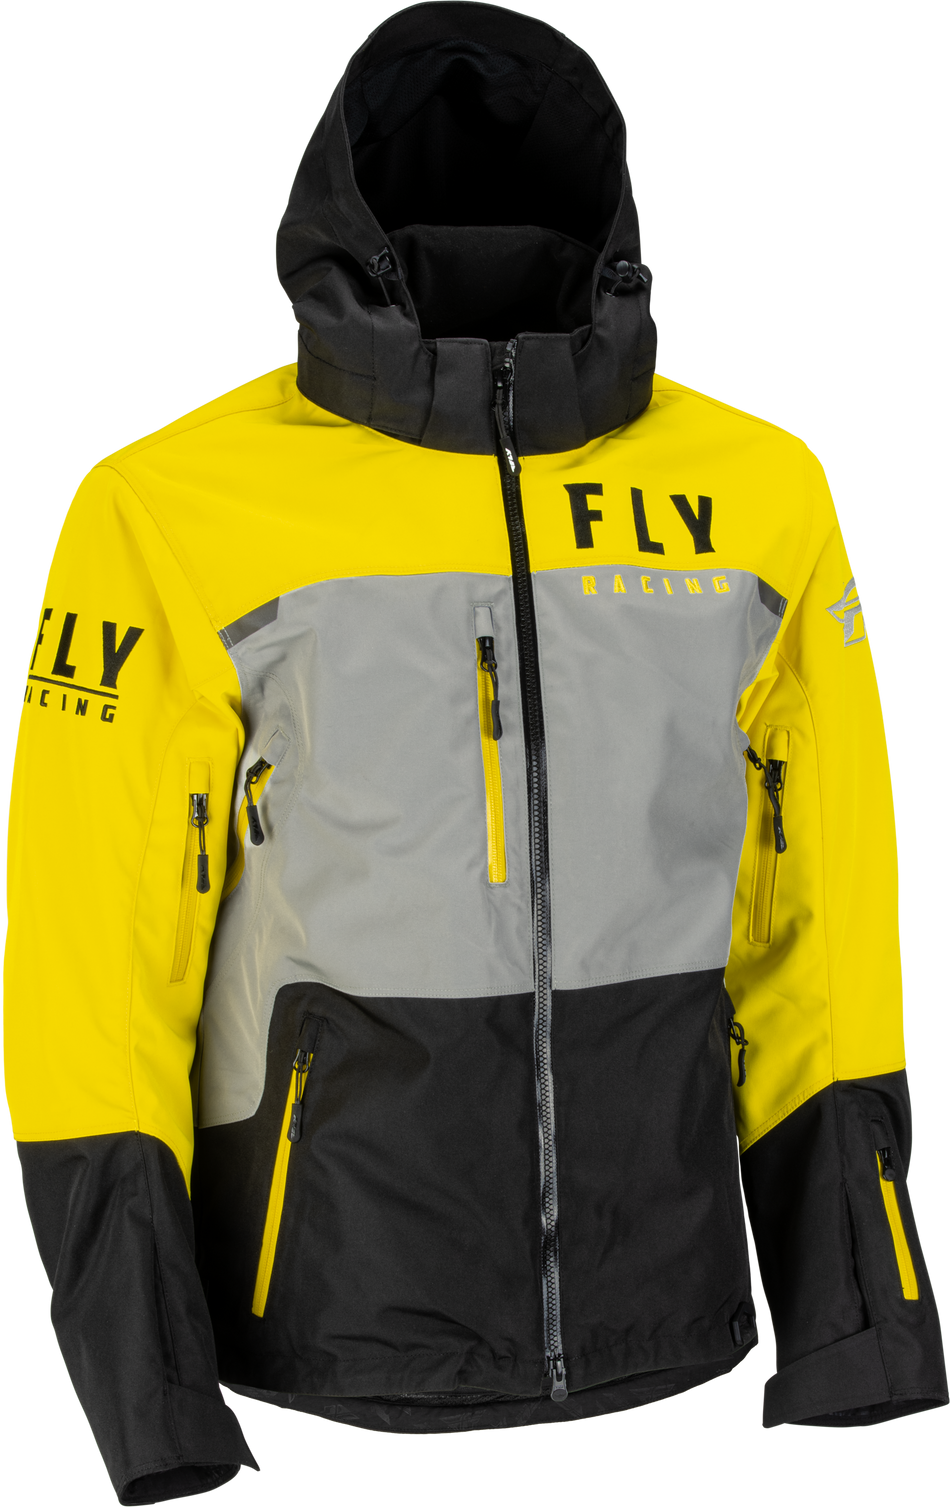 FLY RACING Carbon Jacket Yellow/Grey Lg 470-4136L